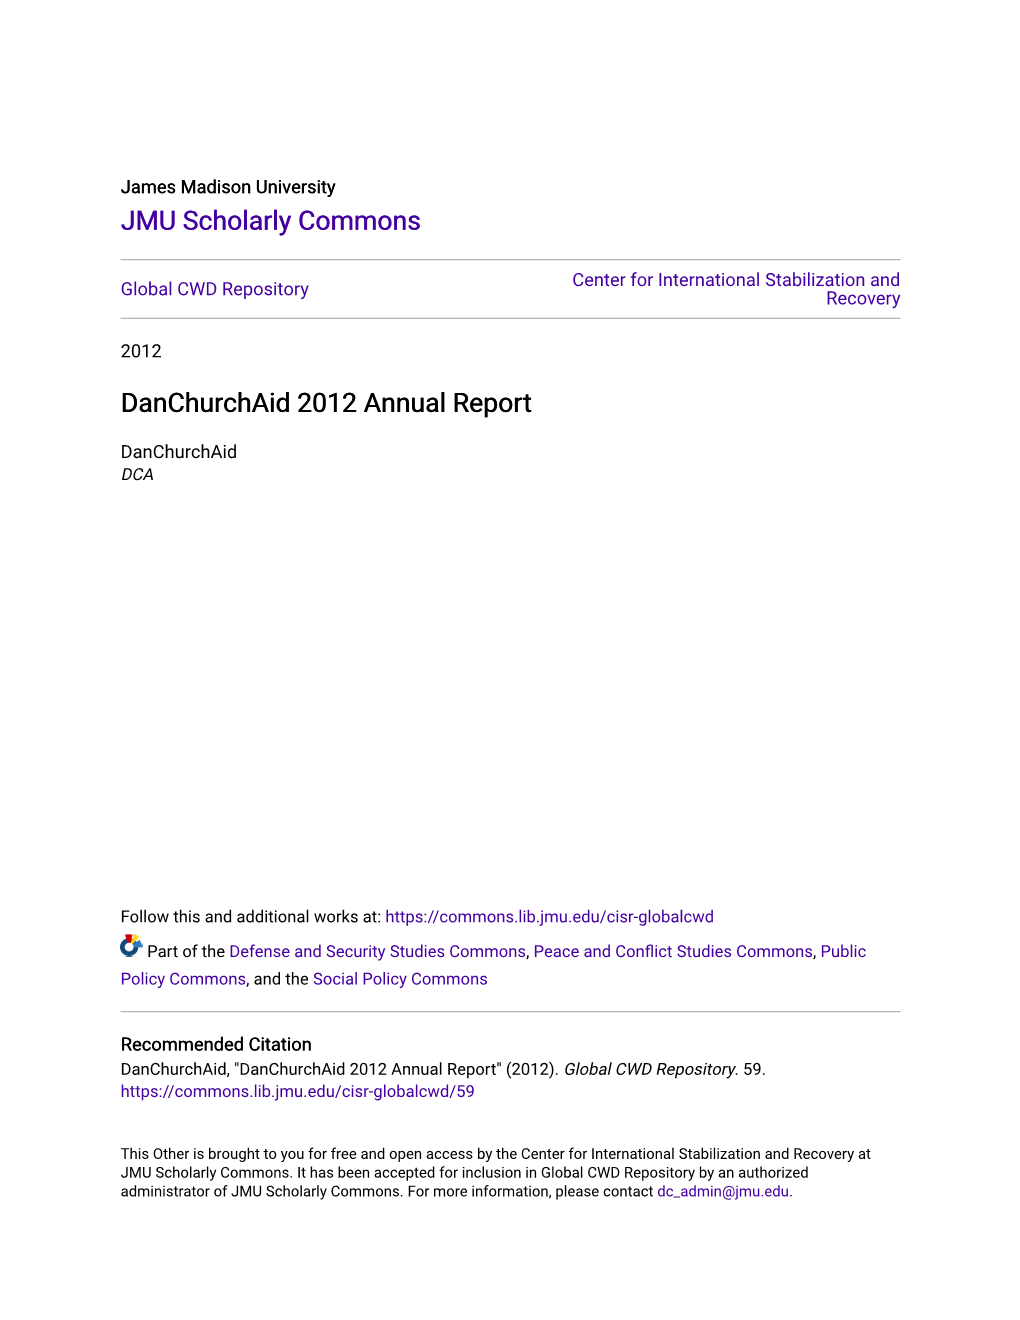 Danchurchaid 2012 Annual Report